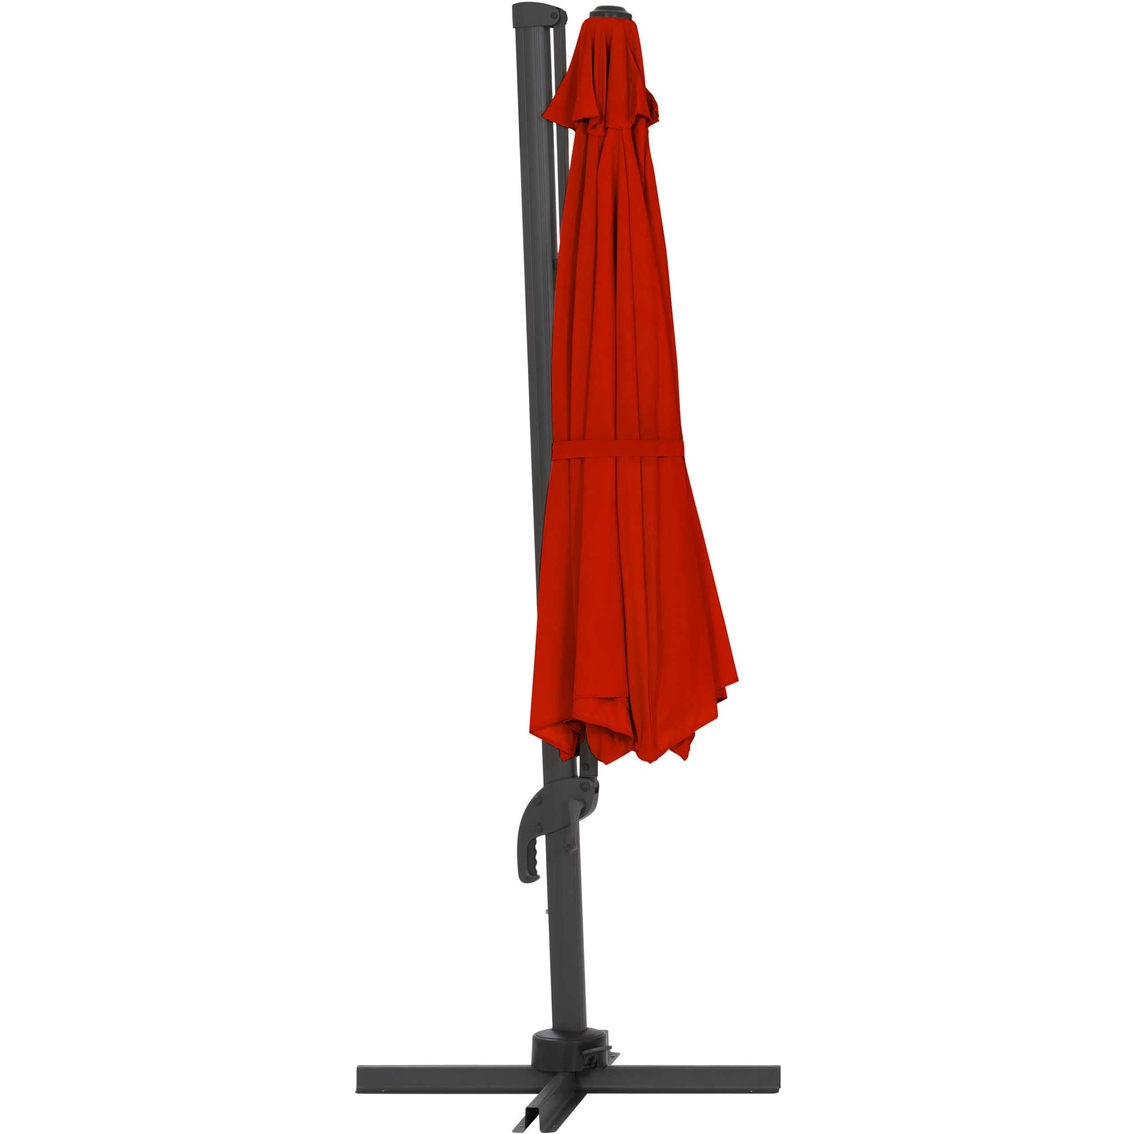 CorLiving 11.5 ft. UV Resistant Deluxe Tilting Patio Umbrella - Image 3 of 10